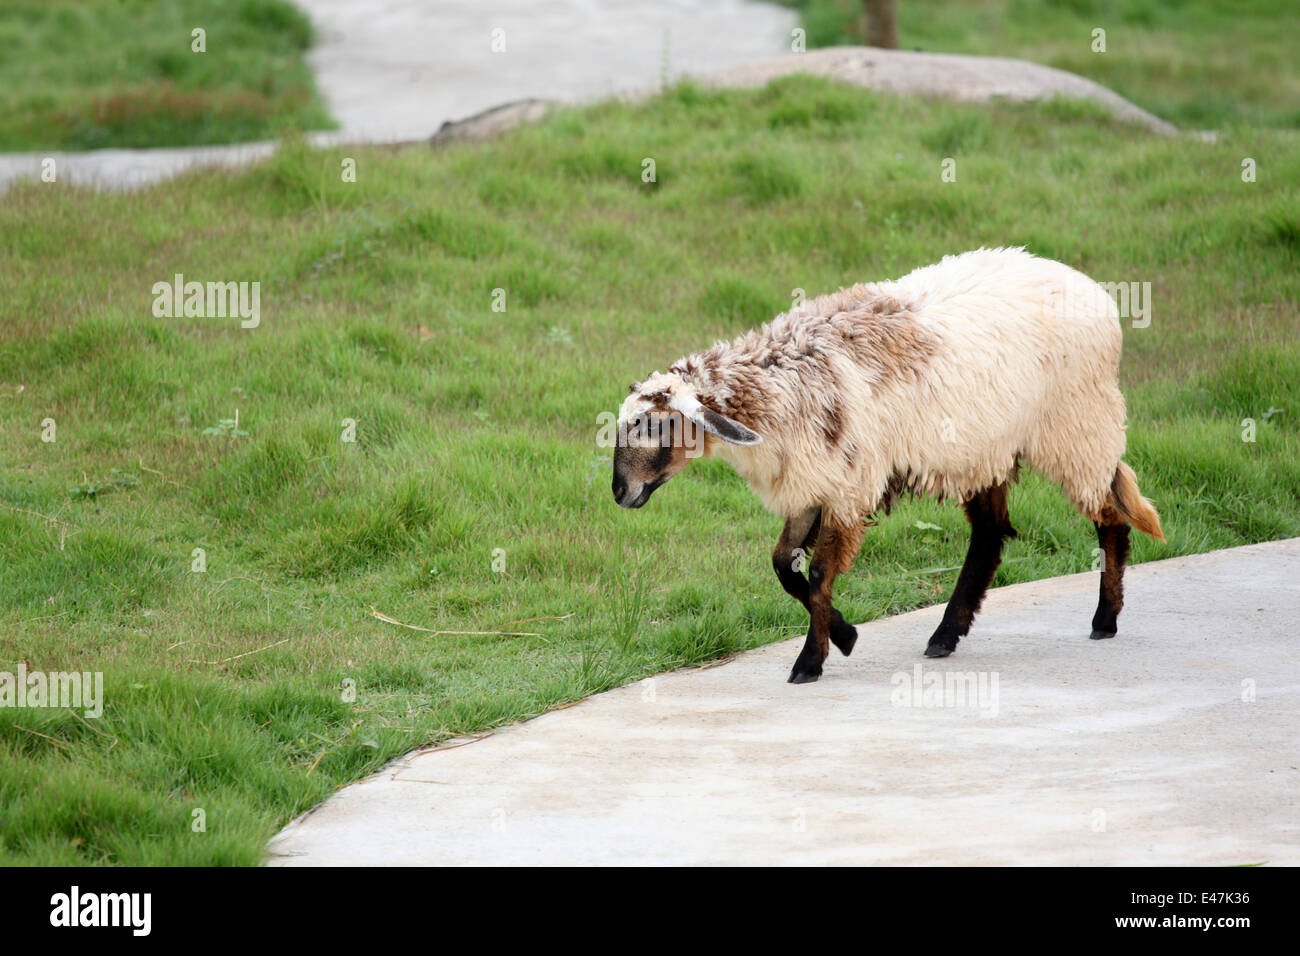 Sheep in the farm of Livestock. Stock Photo